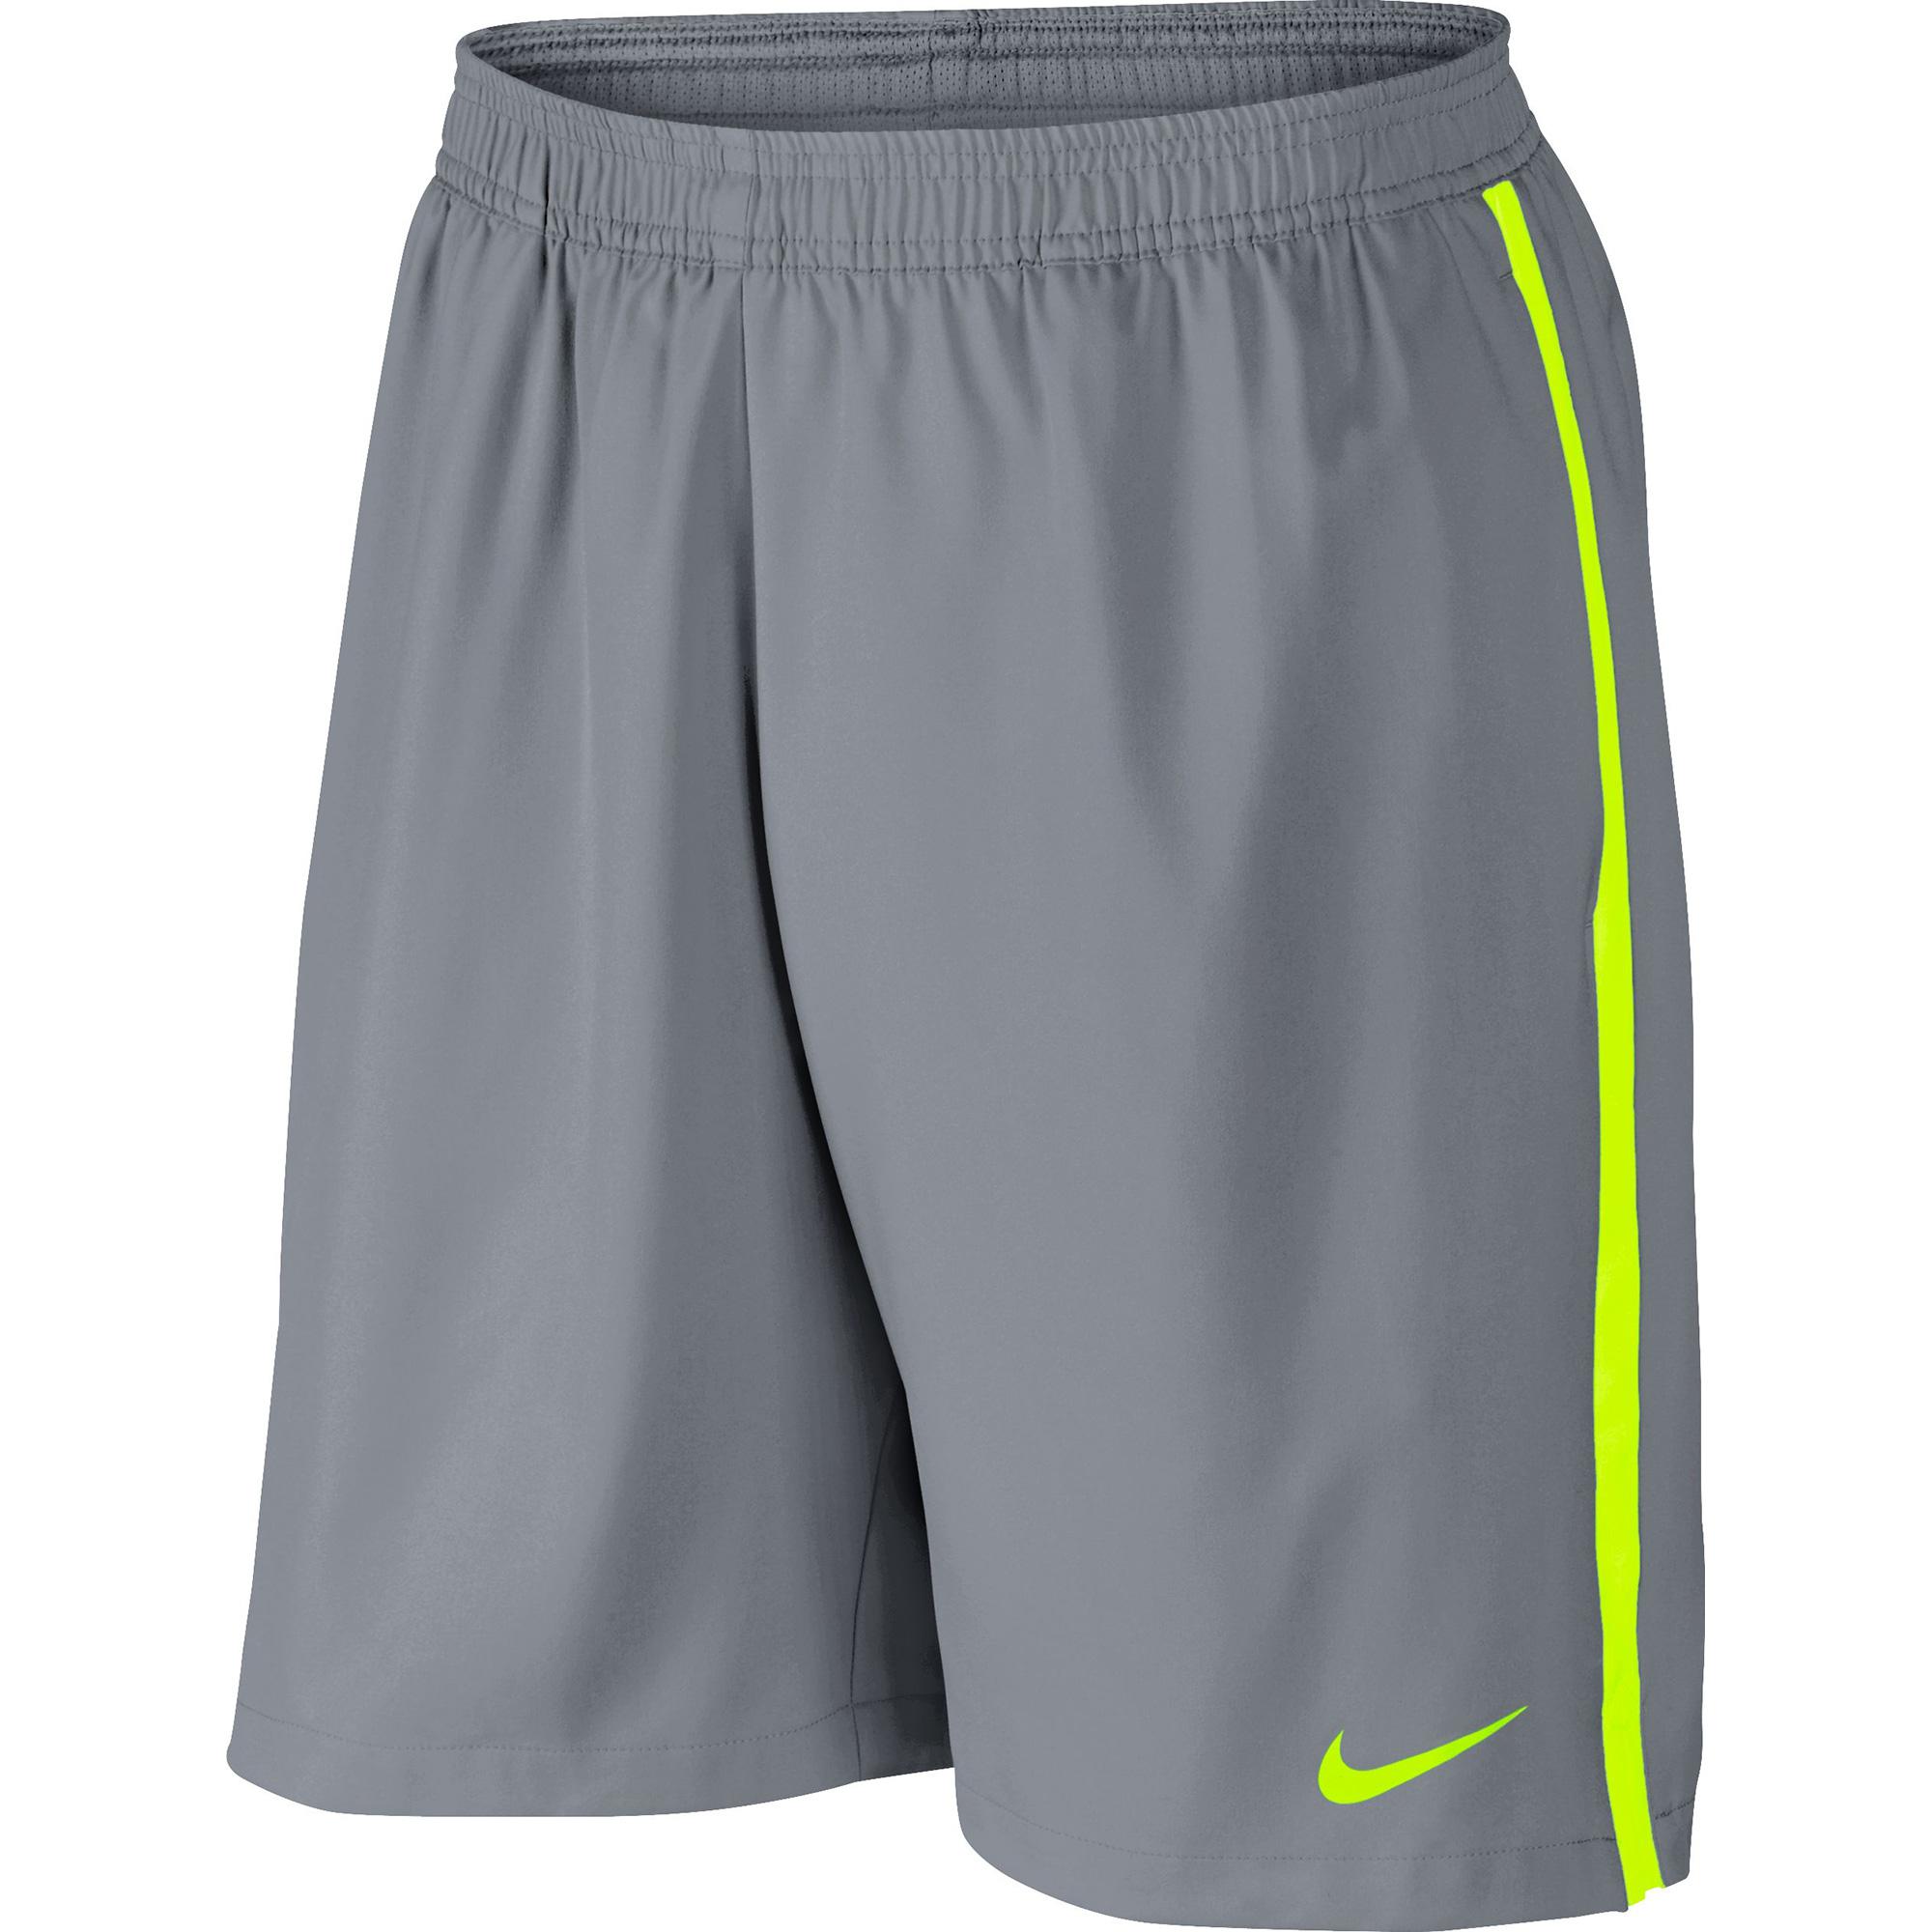 Nike Mens Court 9 Inch Tennis Shorts - Stealth Grey/Volt - Tennisnuts.com